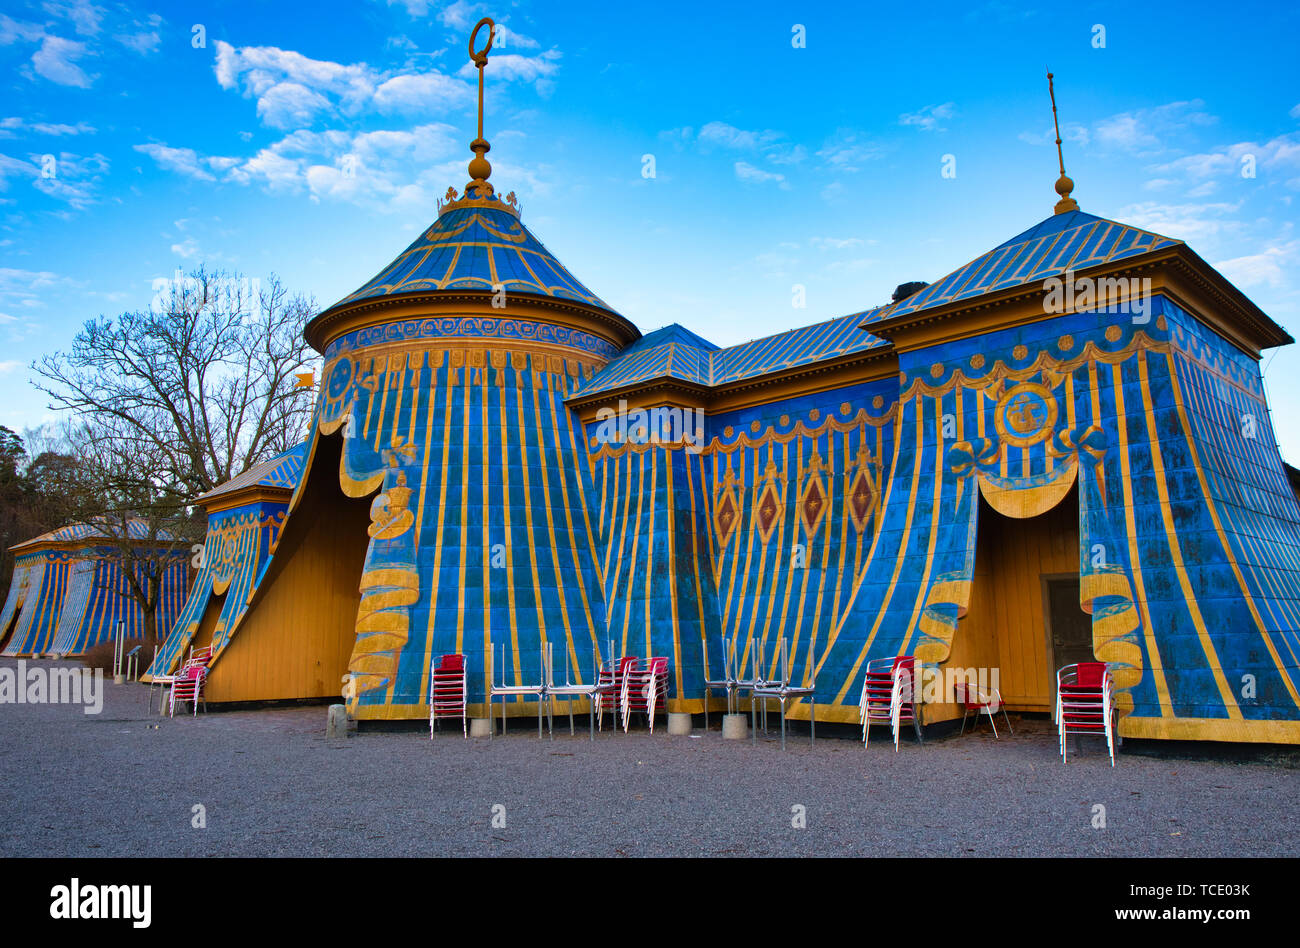 Sultan's Copper Tents, Haga Park (Hagaparken), Solna, Stockholm, Sweden, Scandinavia Stock Photo